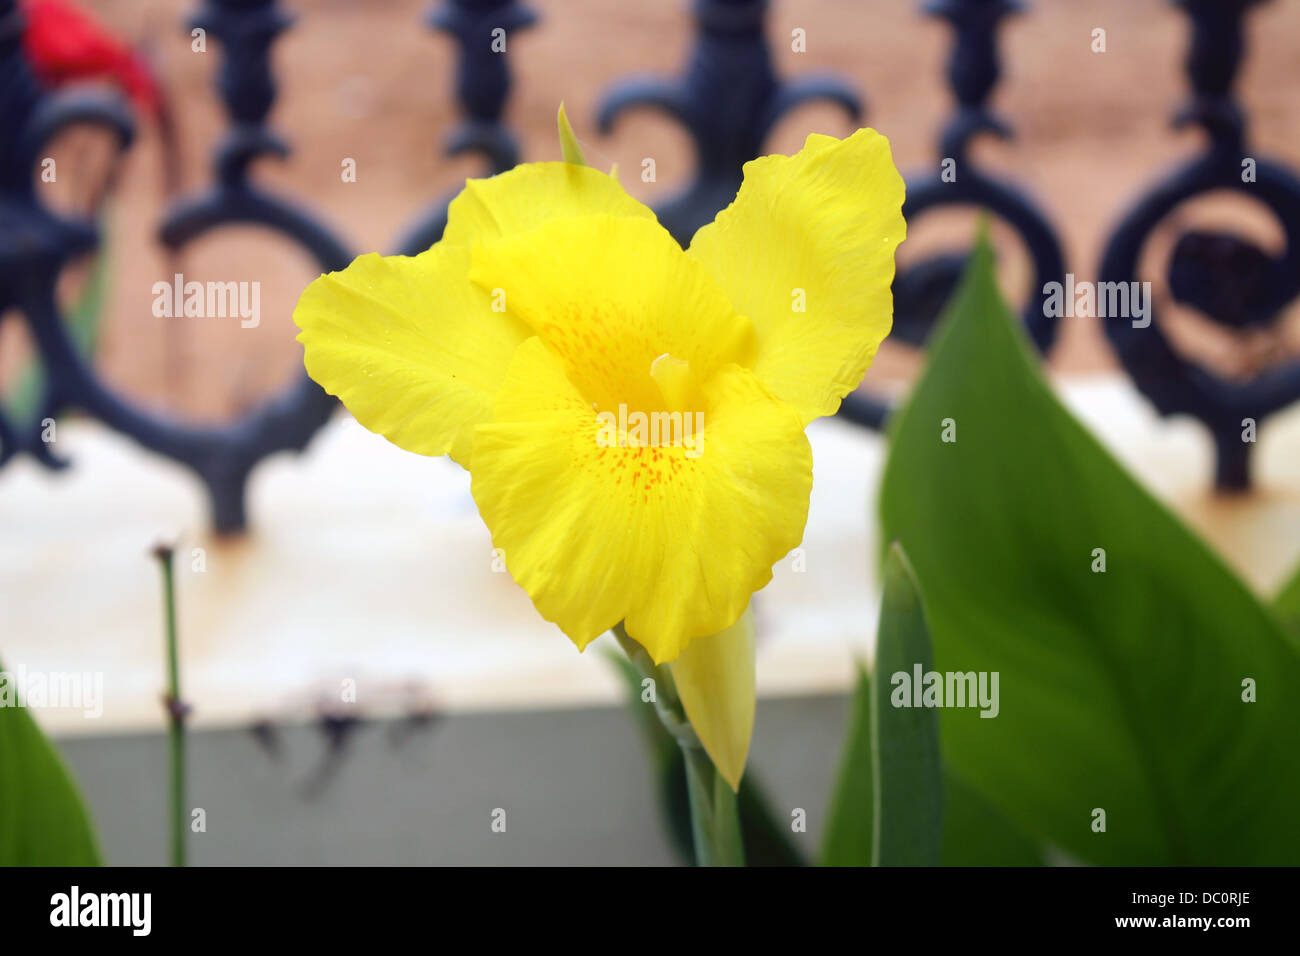 Yellow Canna lily Stock Photo